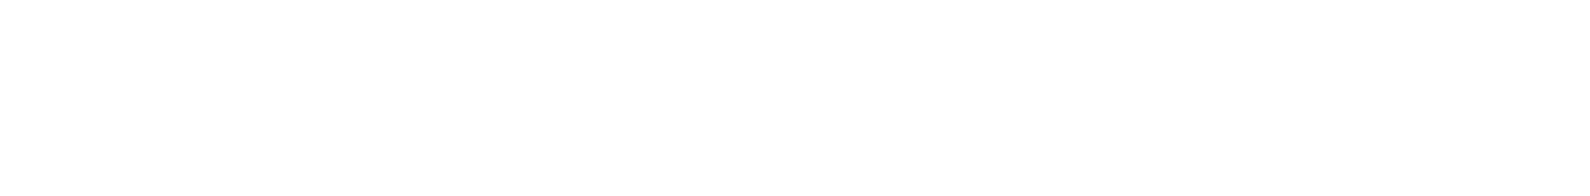 PowerFleet
 logo large for dark backgrounds (transparent PNG)